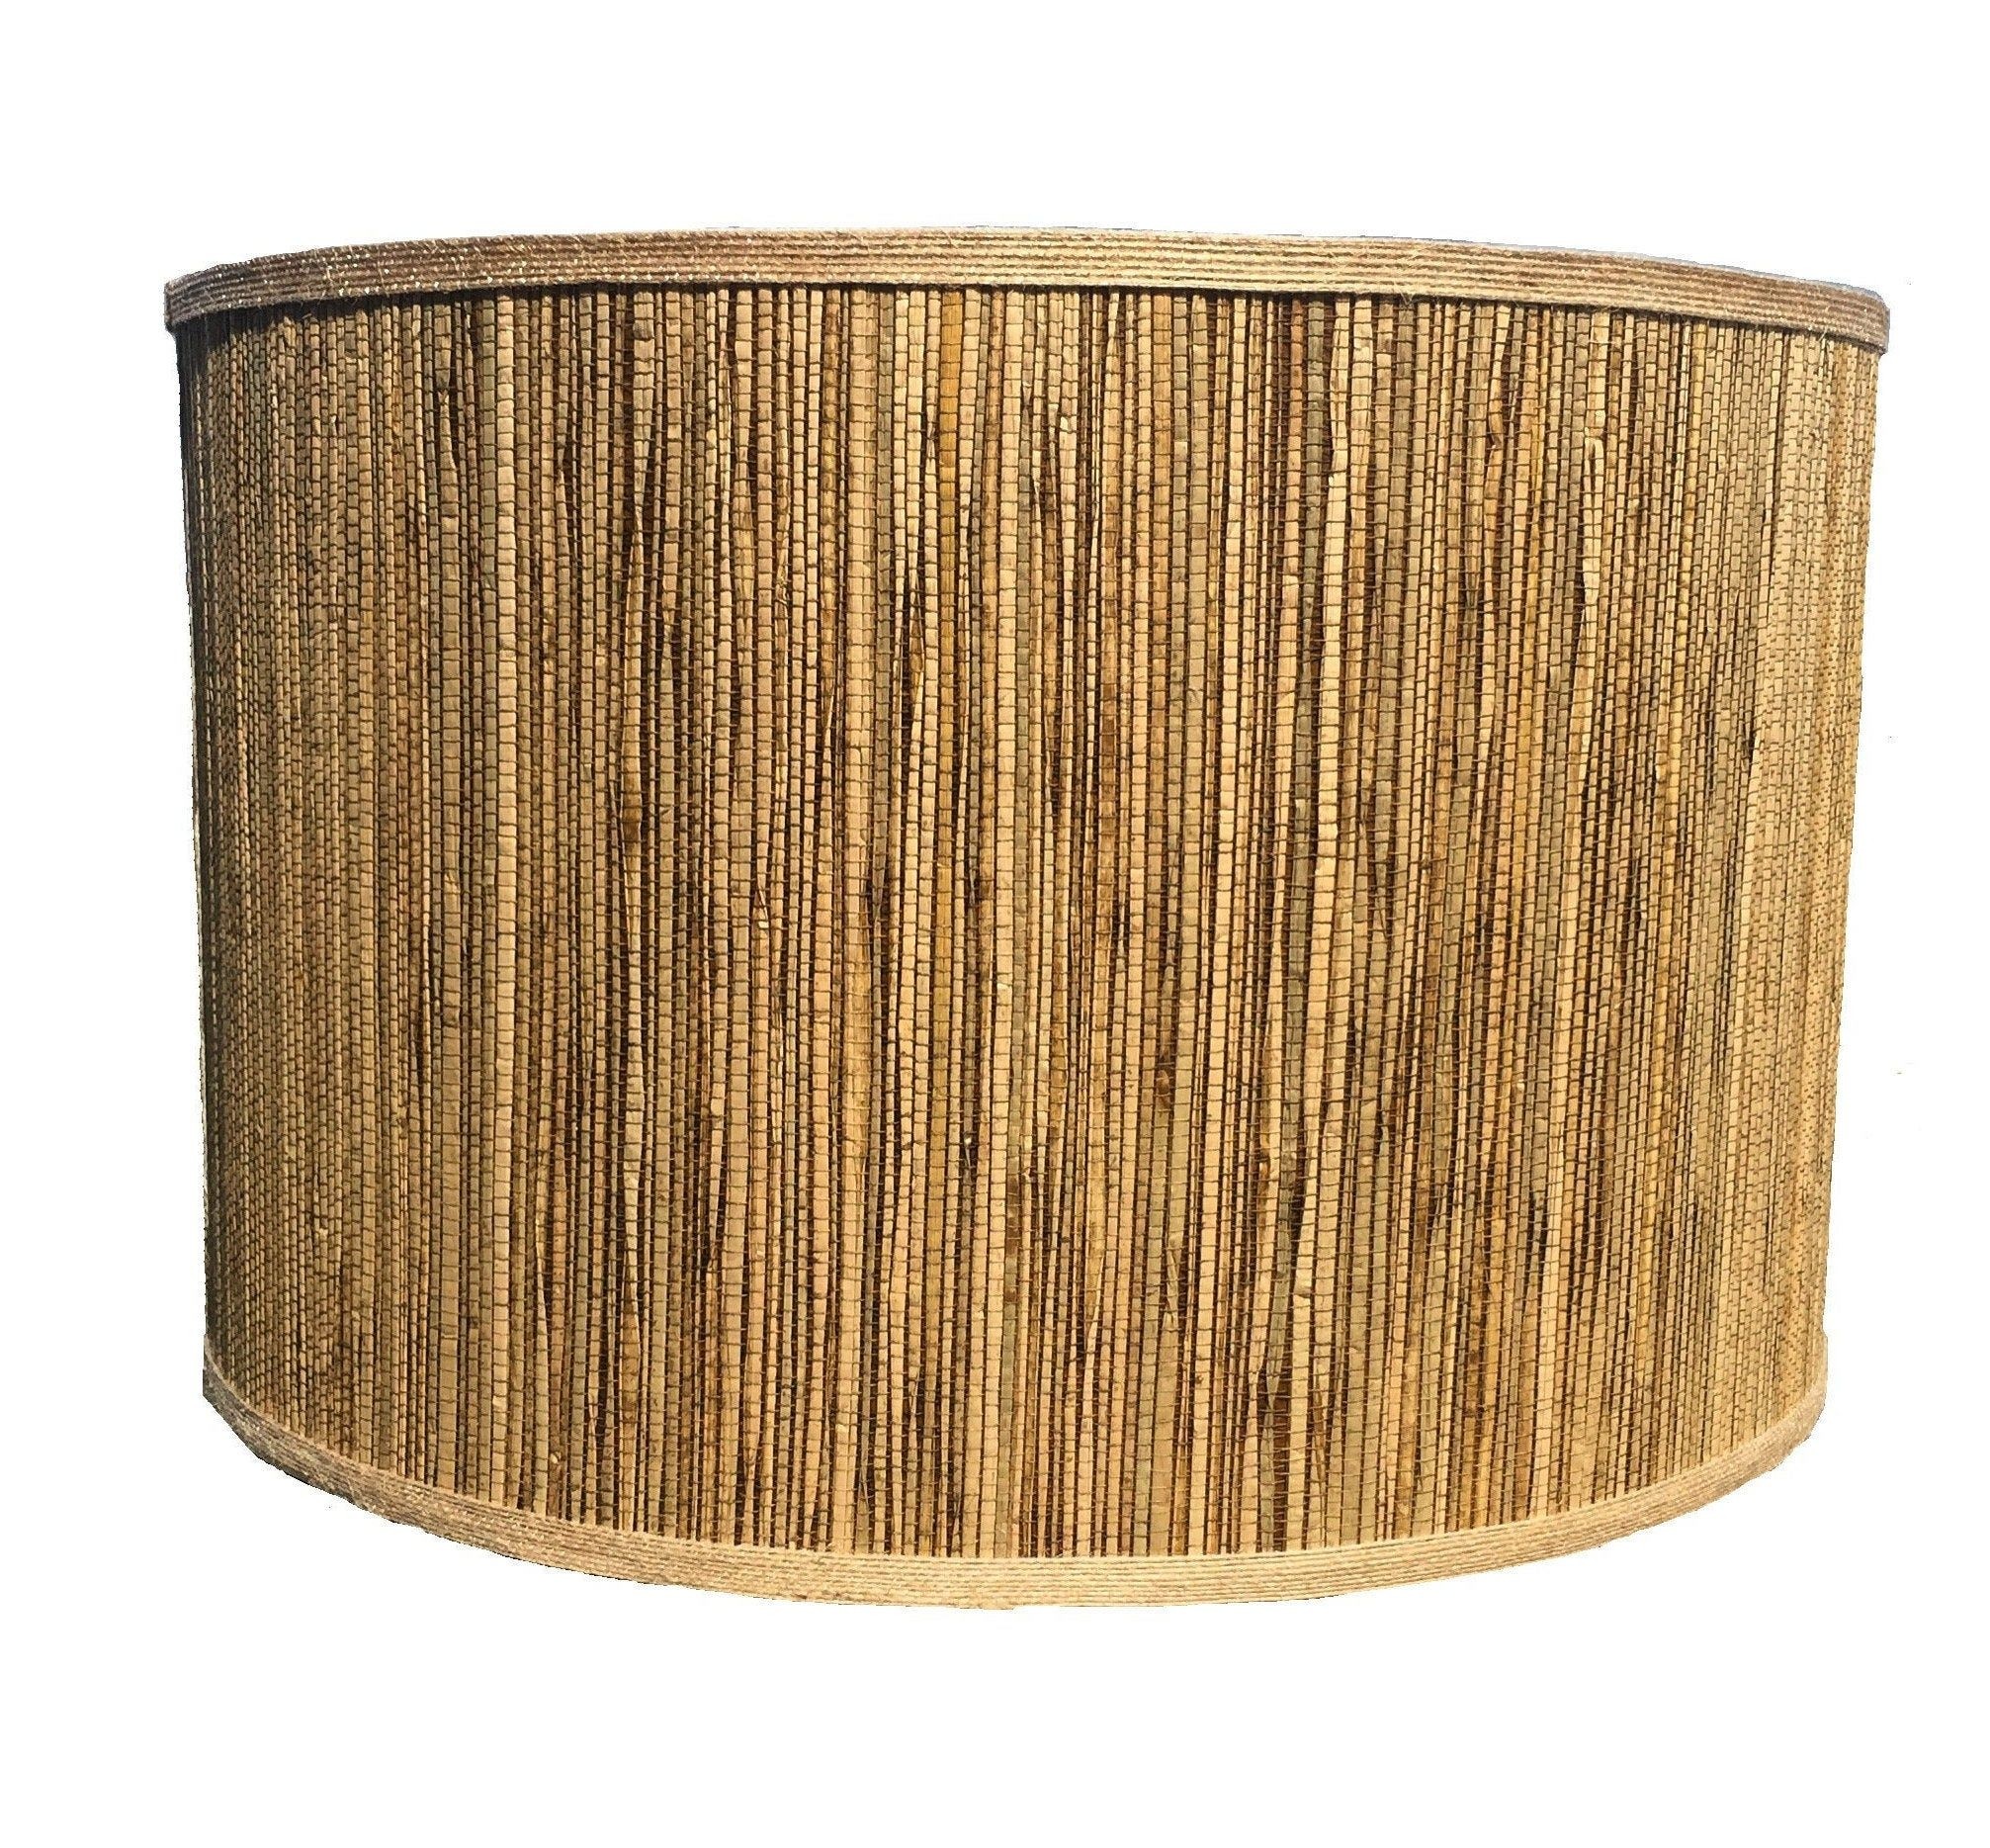 Brown seagrass drum lamp shade with natural jute medium